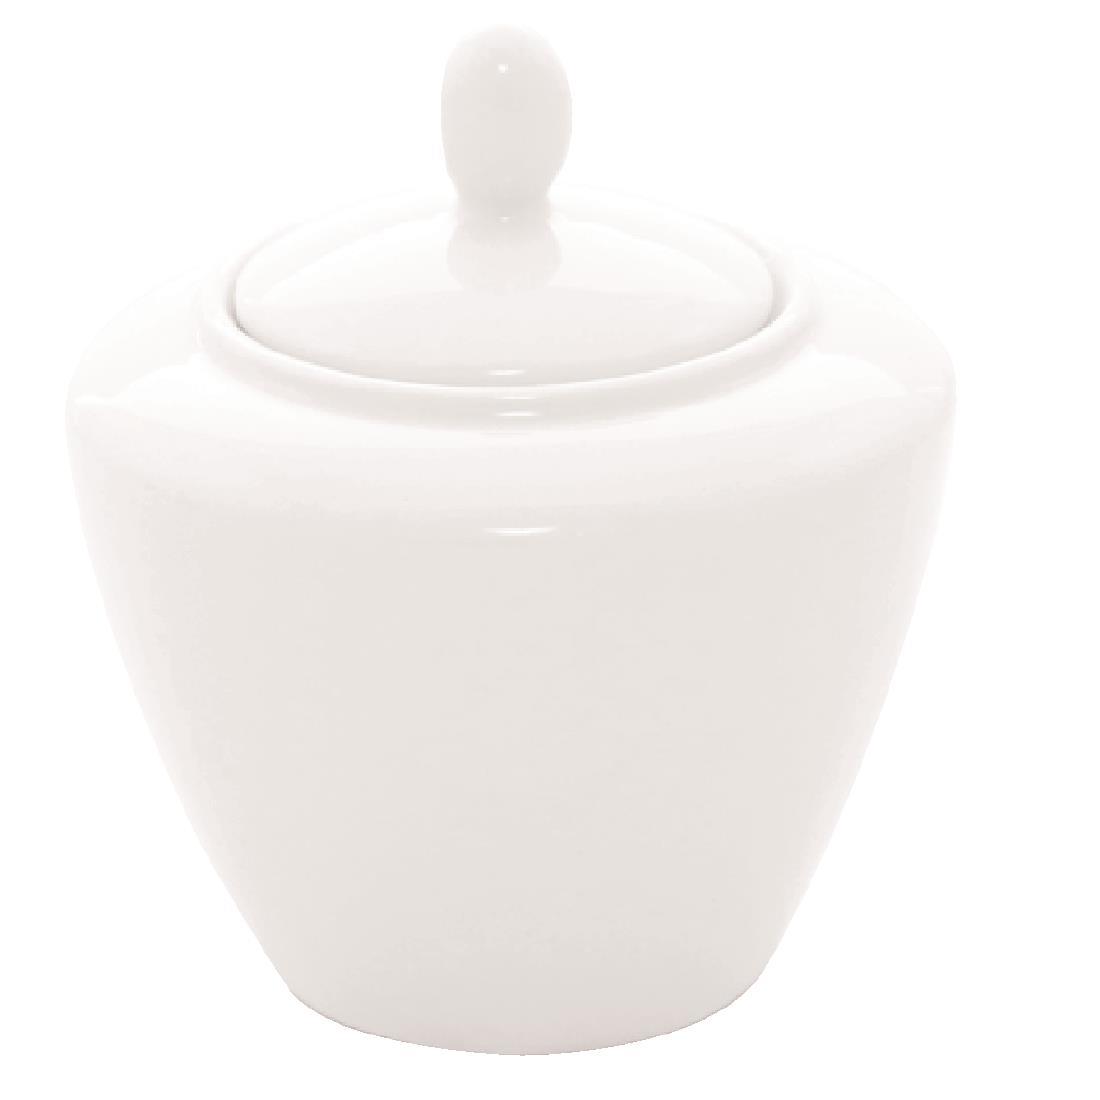 Steelite Simplicity White Covered Sugar Bowls (Pack of 6) - V9493  - 1